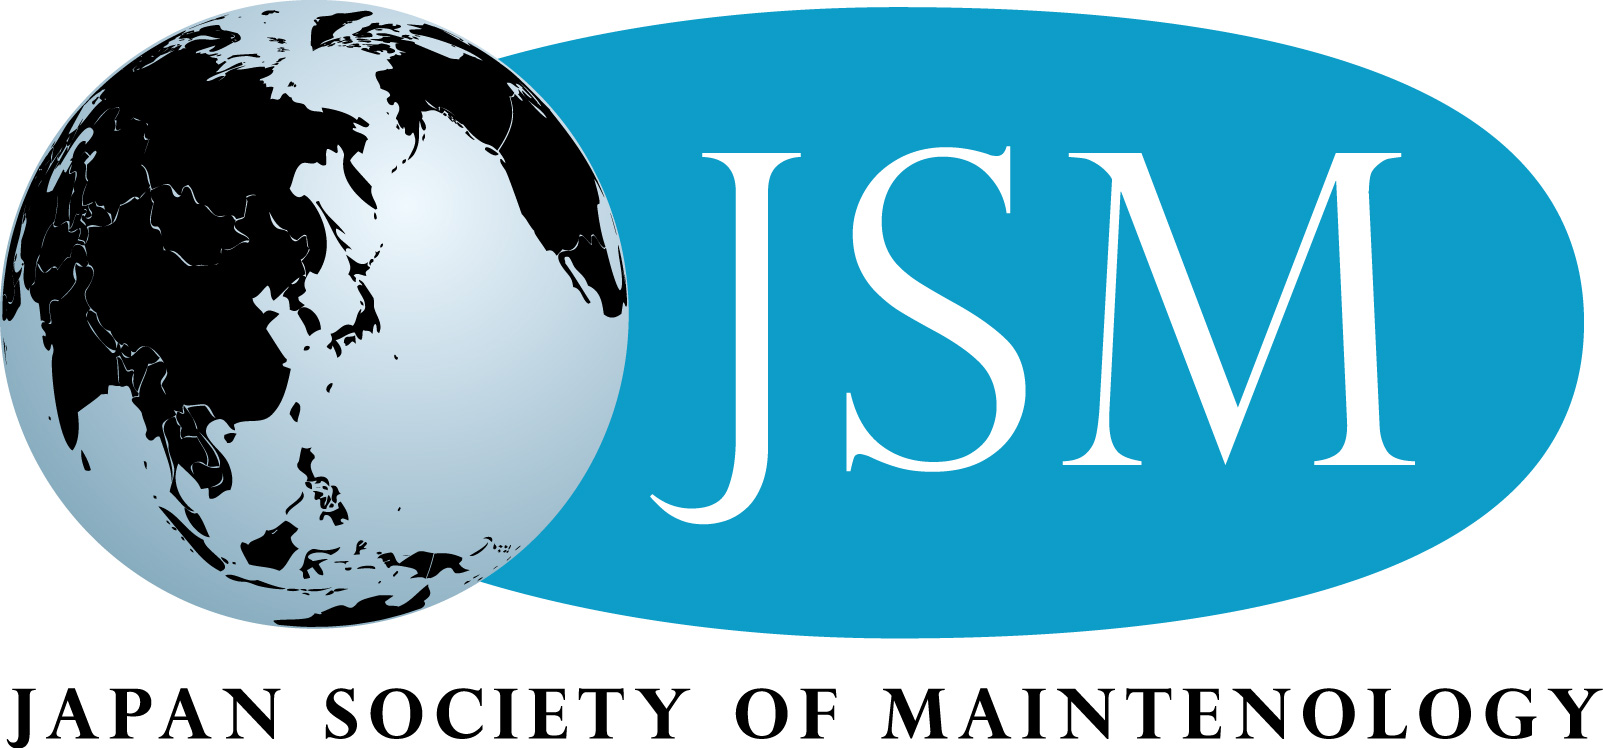 JSM_logo_conference.jpg